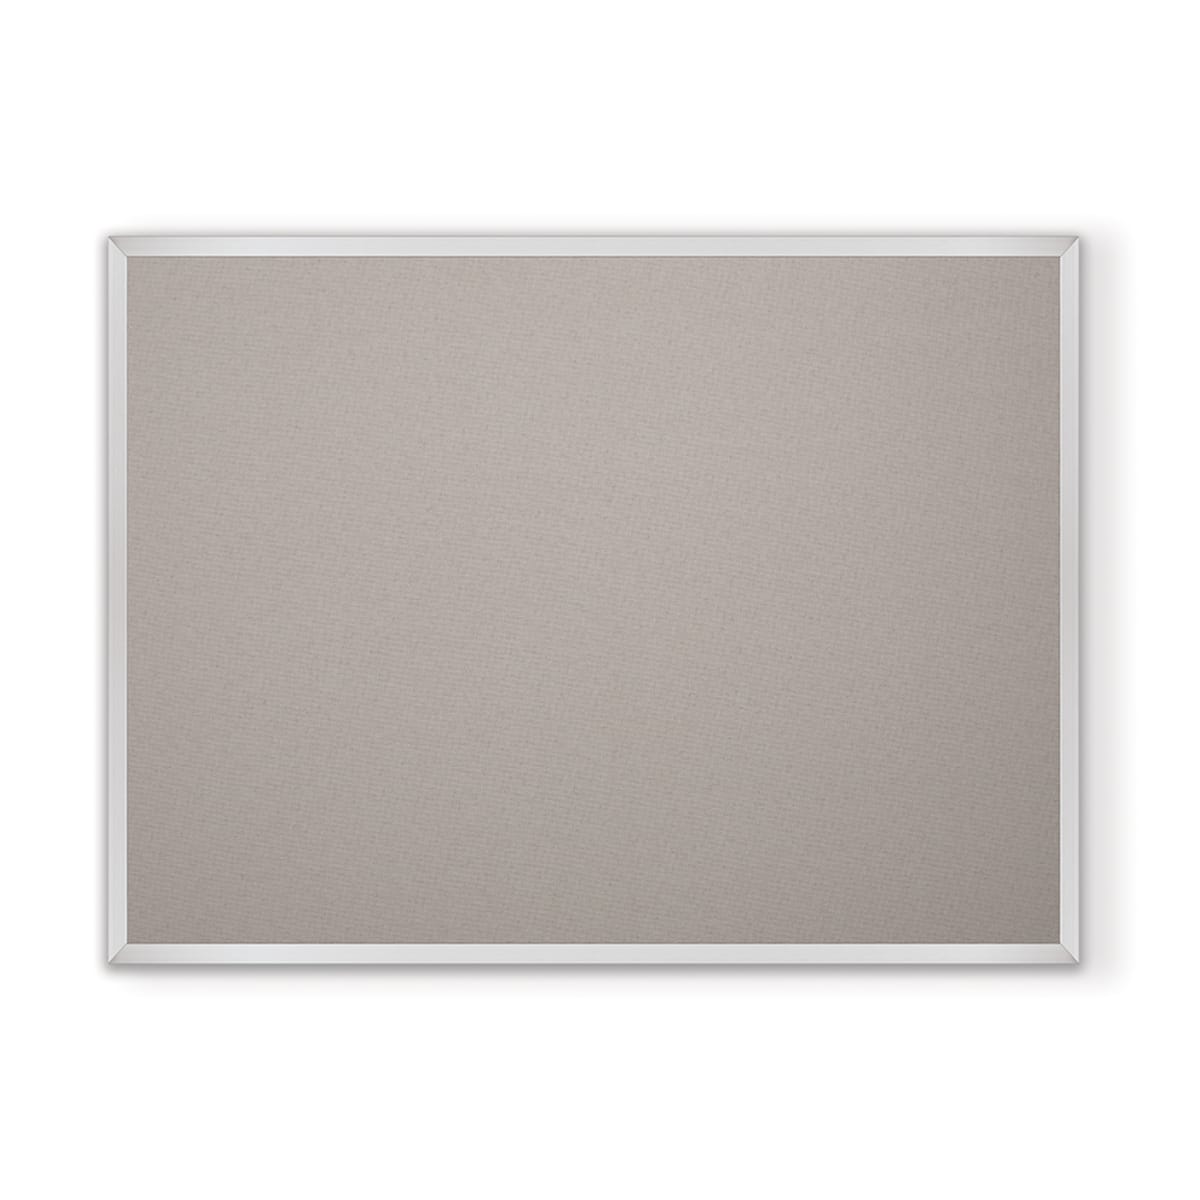 Mooreco Fabric Cork - Plate Tackboard - Aluminum Trim - 2'H x 3'W (MOR-333AB) - SchoolOutlet